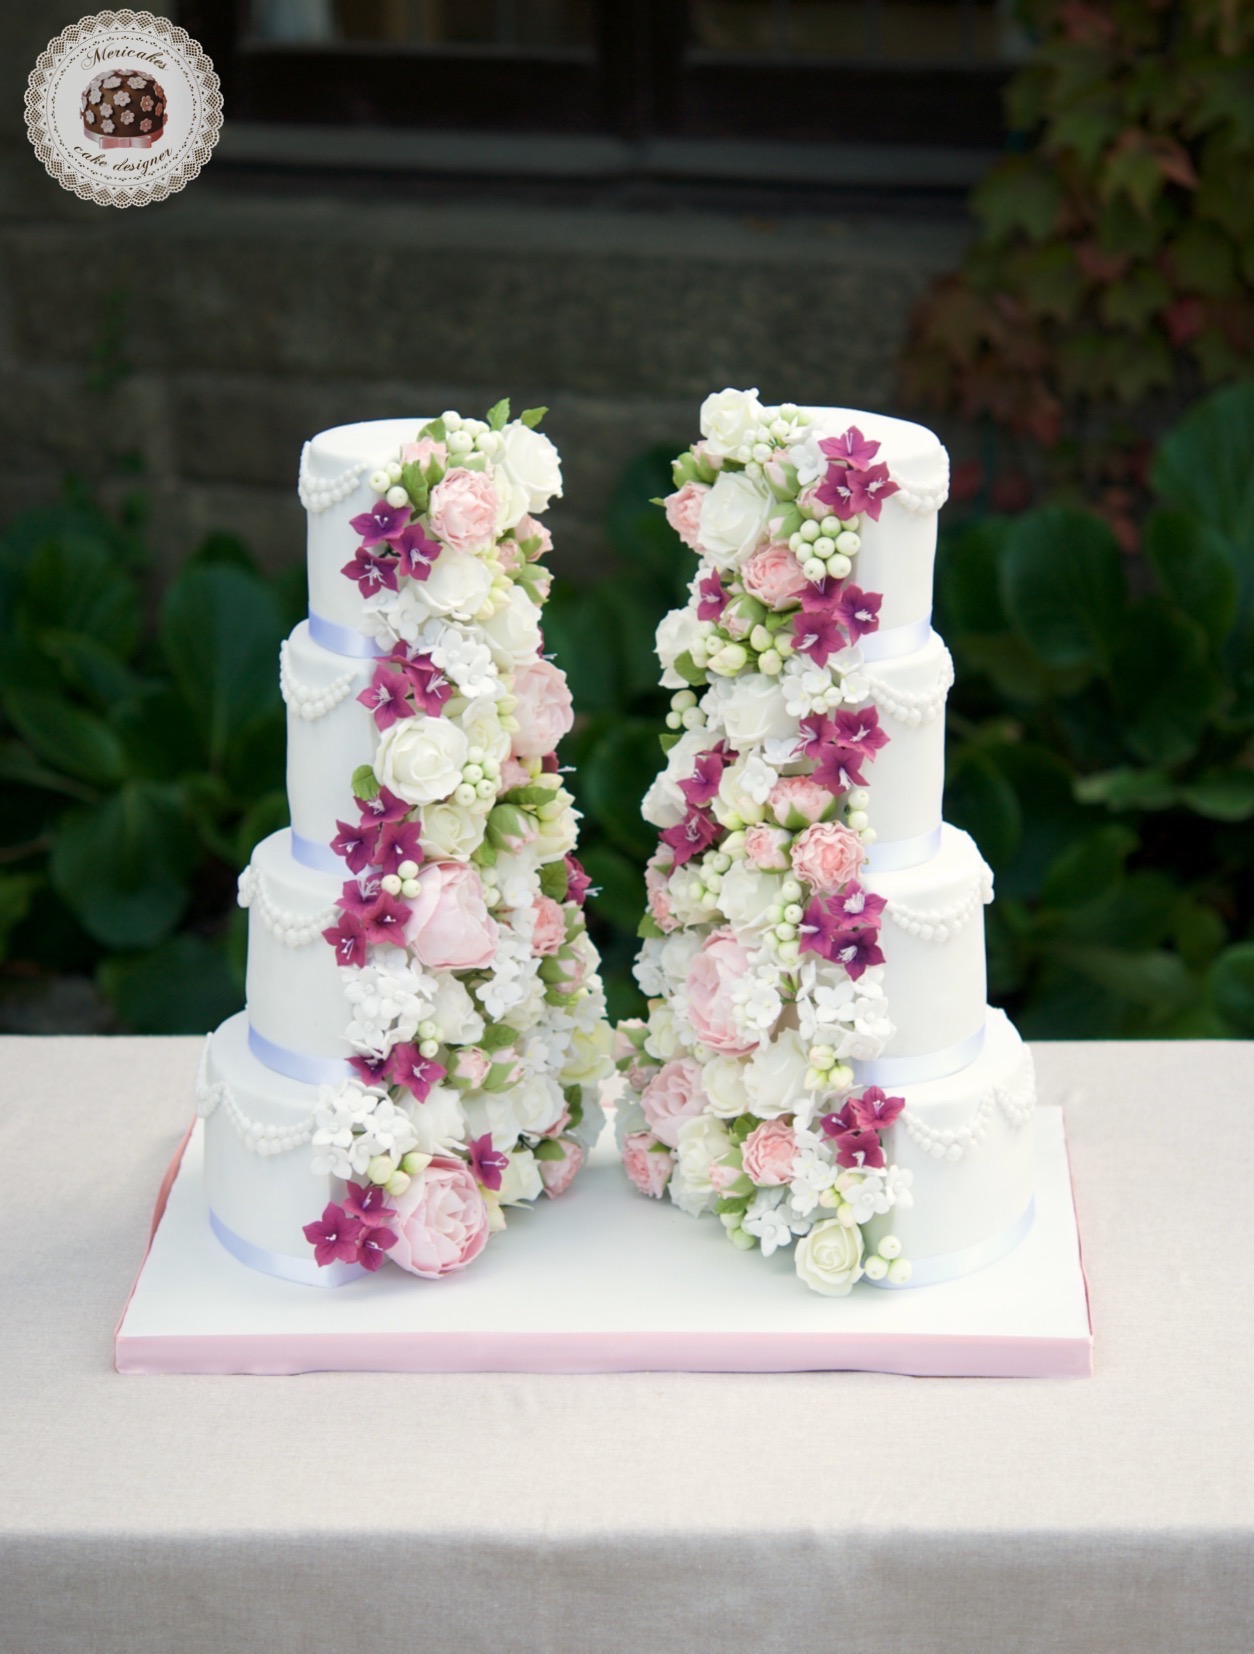 Half and half cake, wedding cake, luxury wedding cakes, mericakes, barcelona, sugarflowers, flores de azucar, la baronia, cake artist, vegan cake, tarta vegana, red velvet, vegan 1